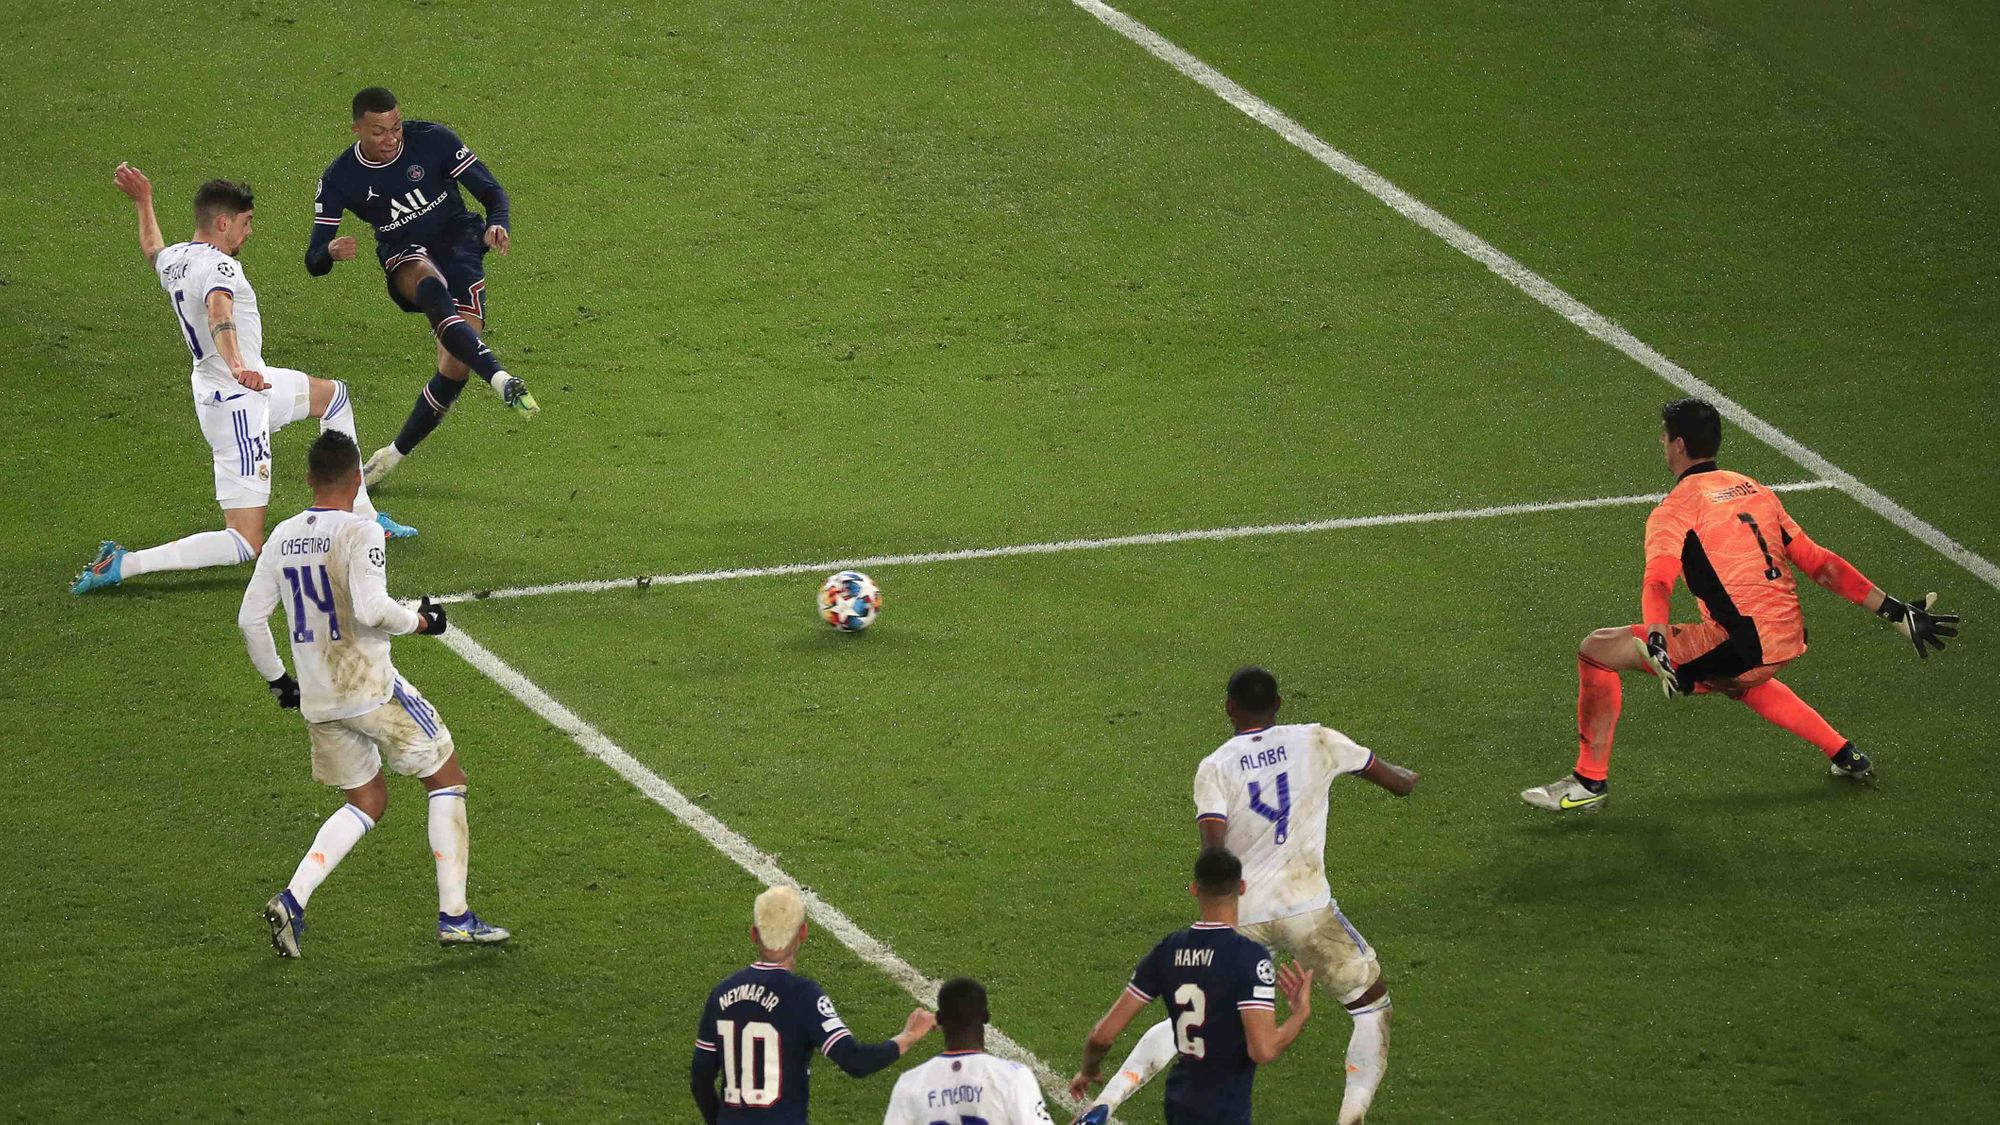 El casting perfecto: Kylian Mbappé fue fundamental en el triunfo ante Real Madrid